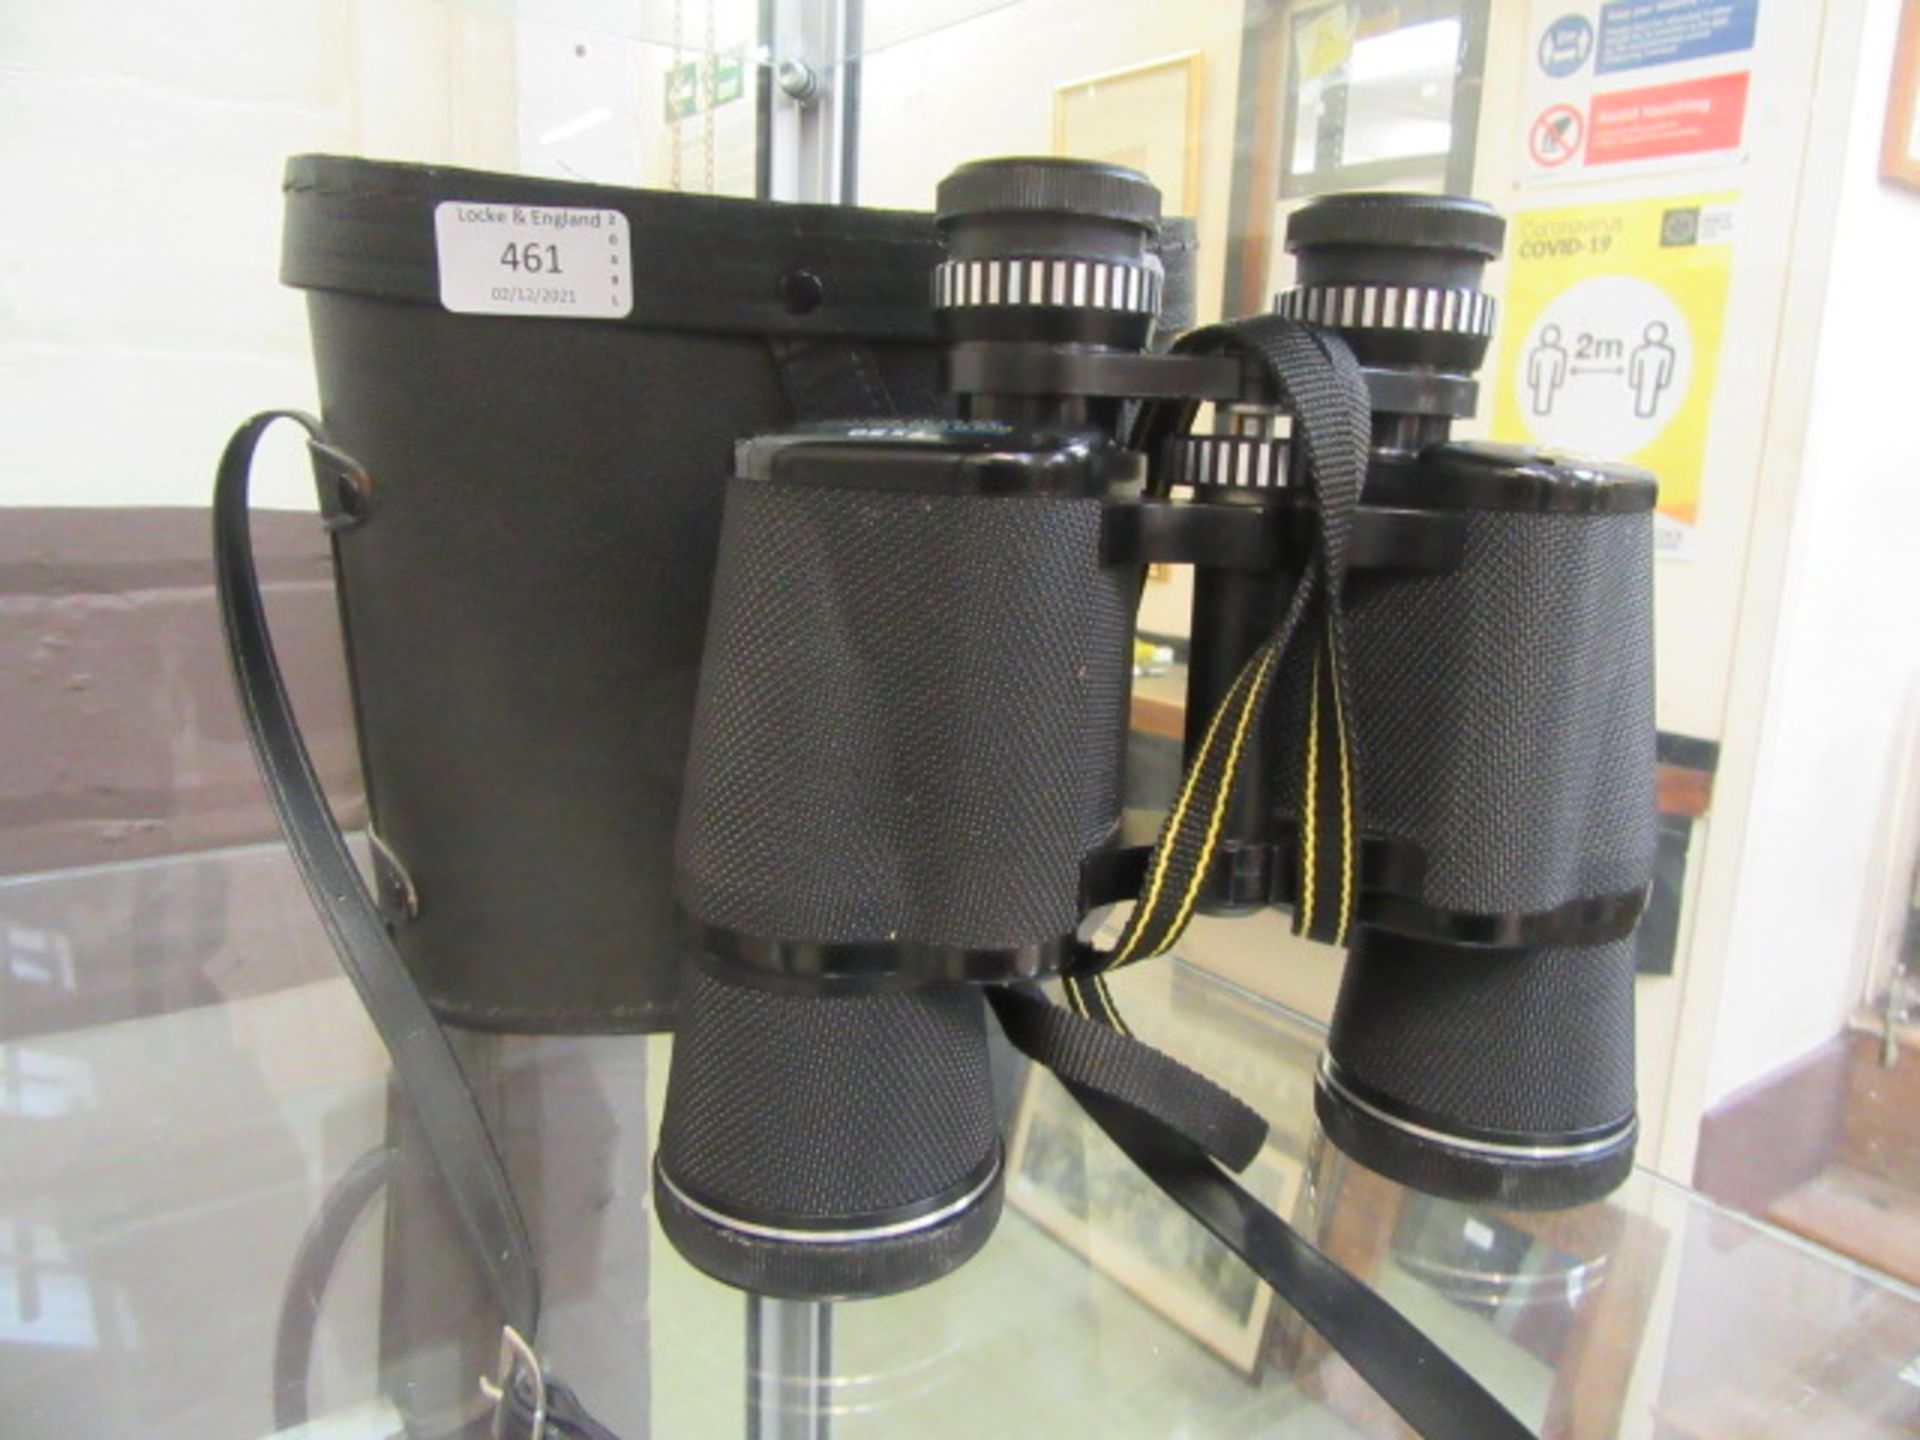 A pair of Miranda 7x50 binoculars